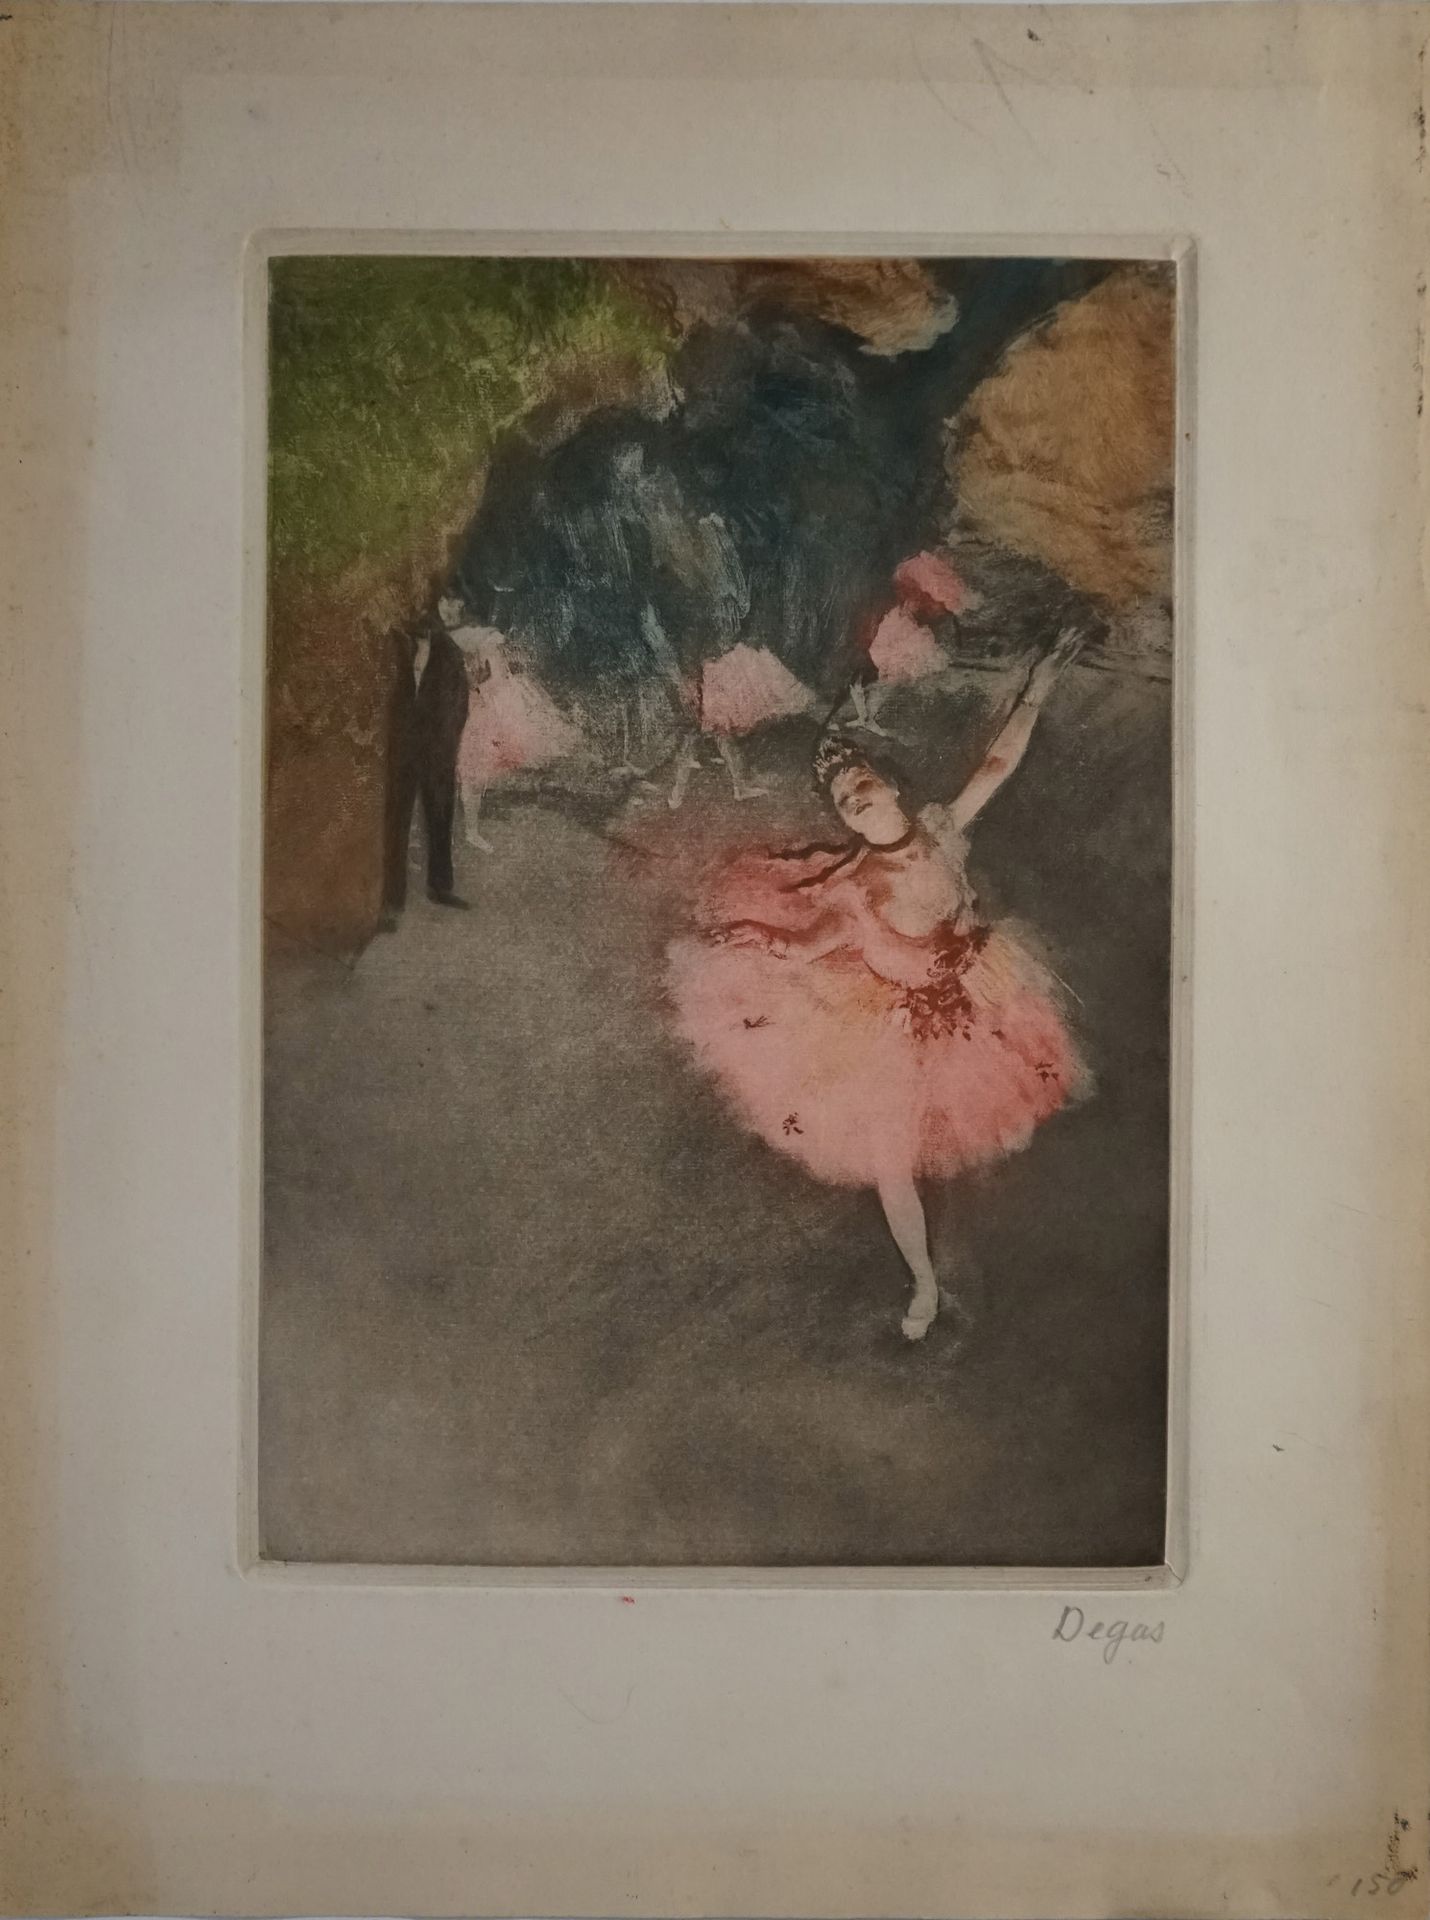 Null After DEGAS

"Dancer", print. 38x28.5cm